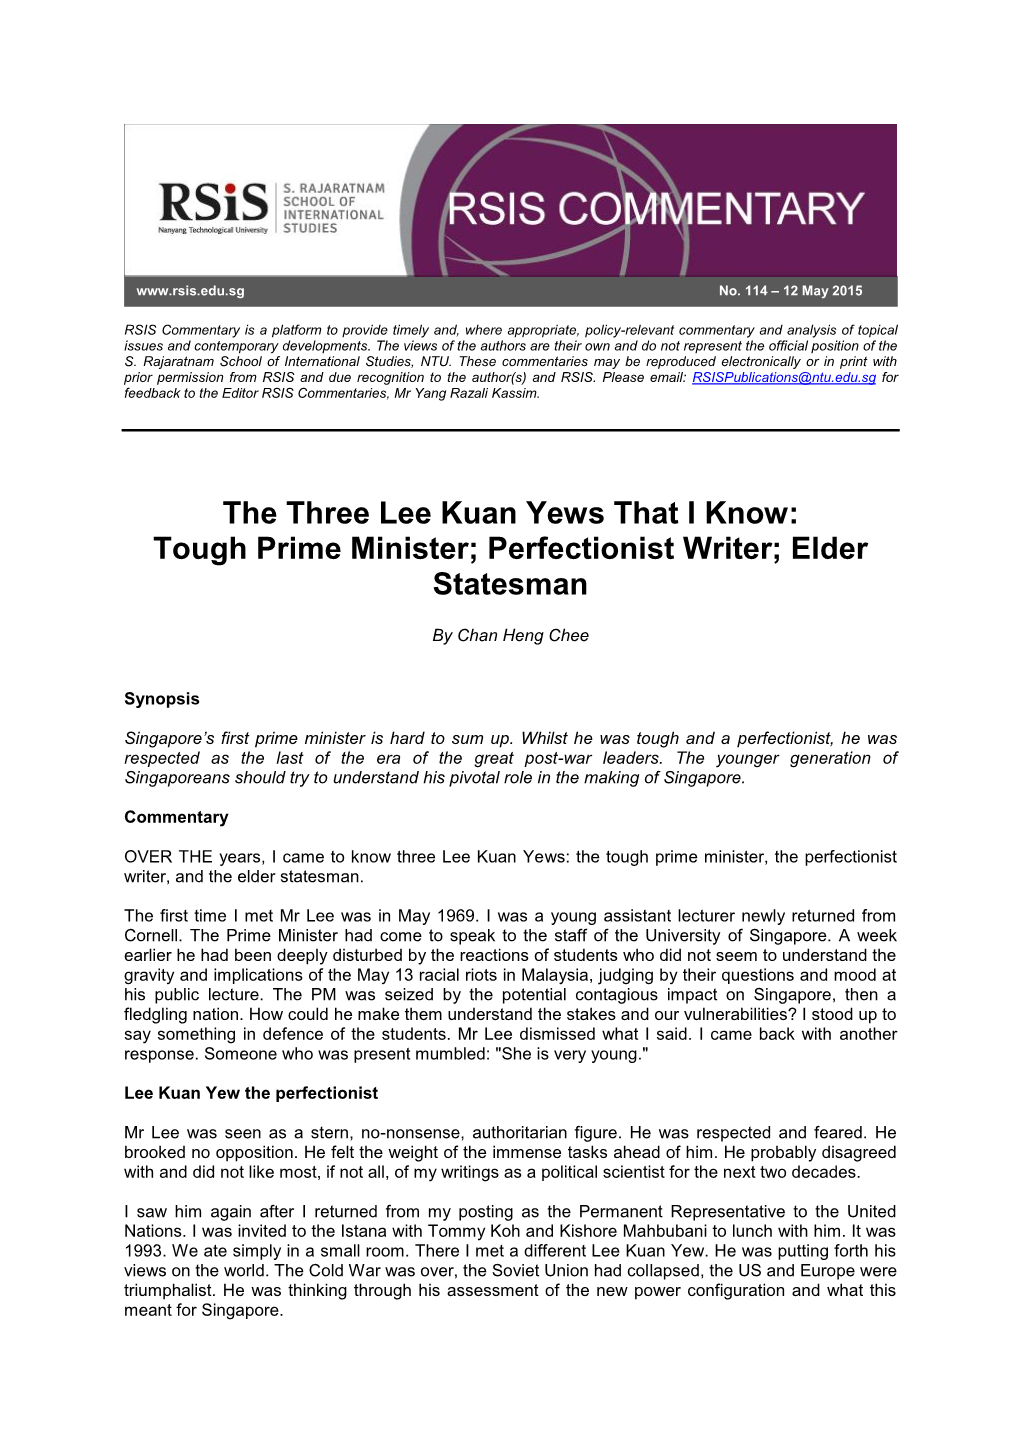 Tough Prime Minister; Perfectionist Writer; Elder Statesman